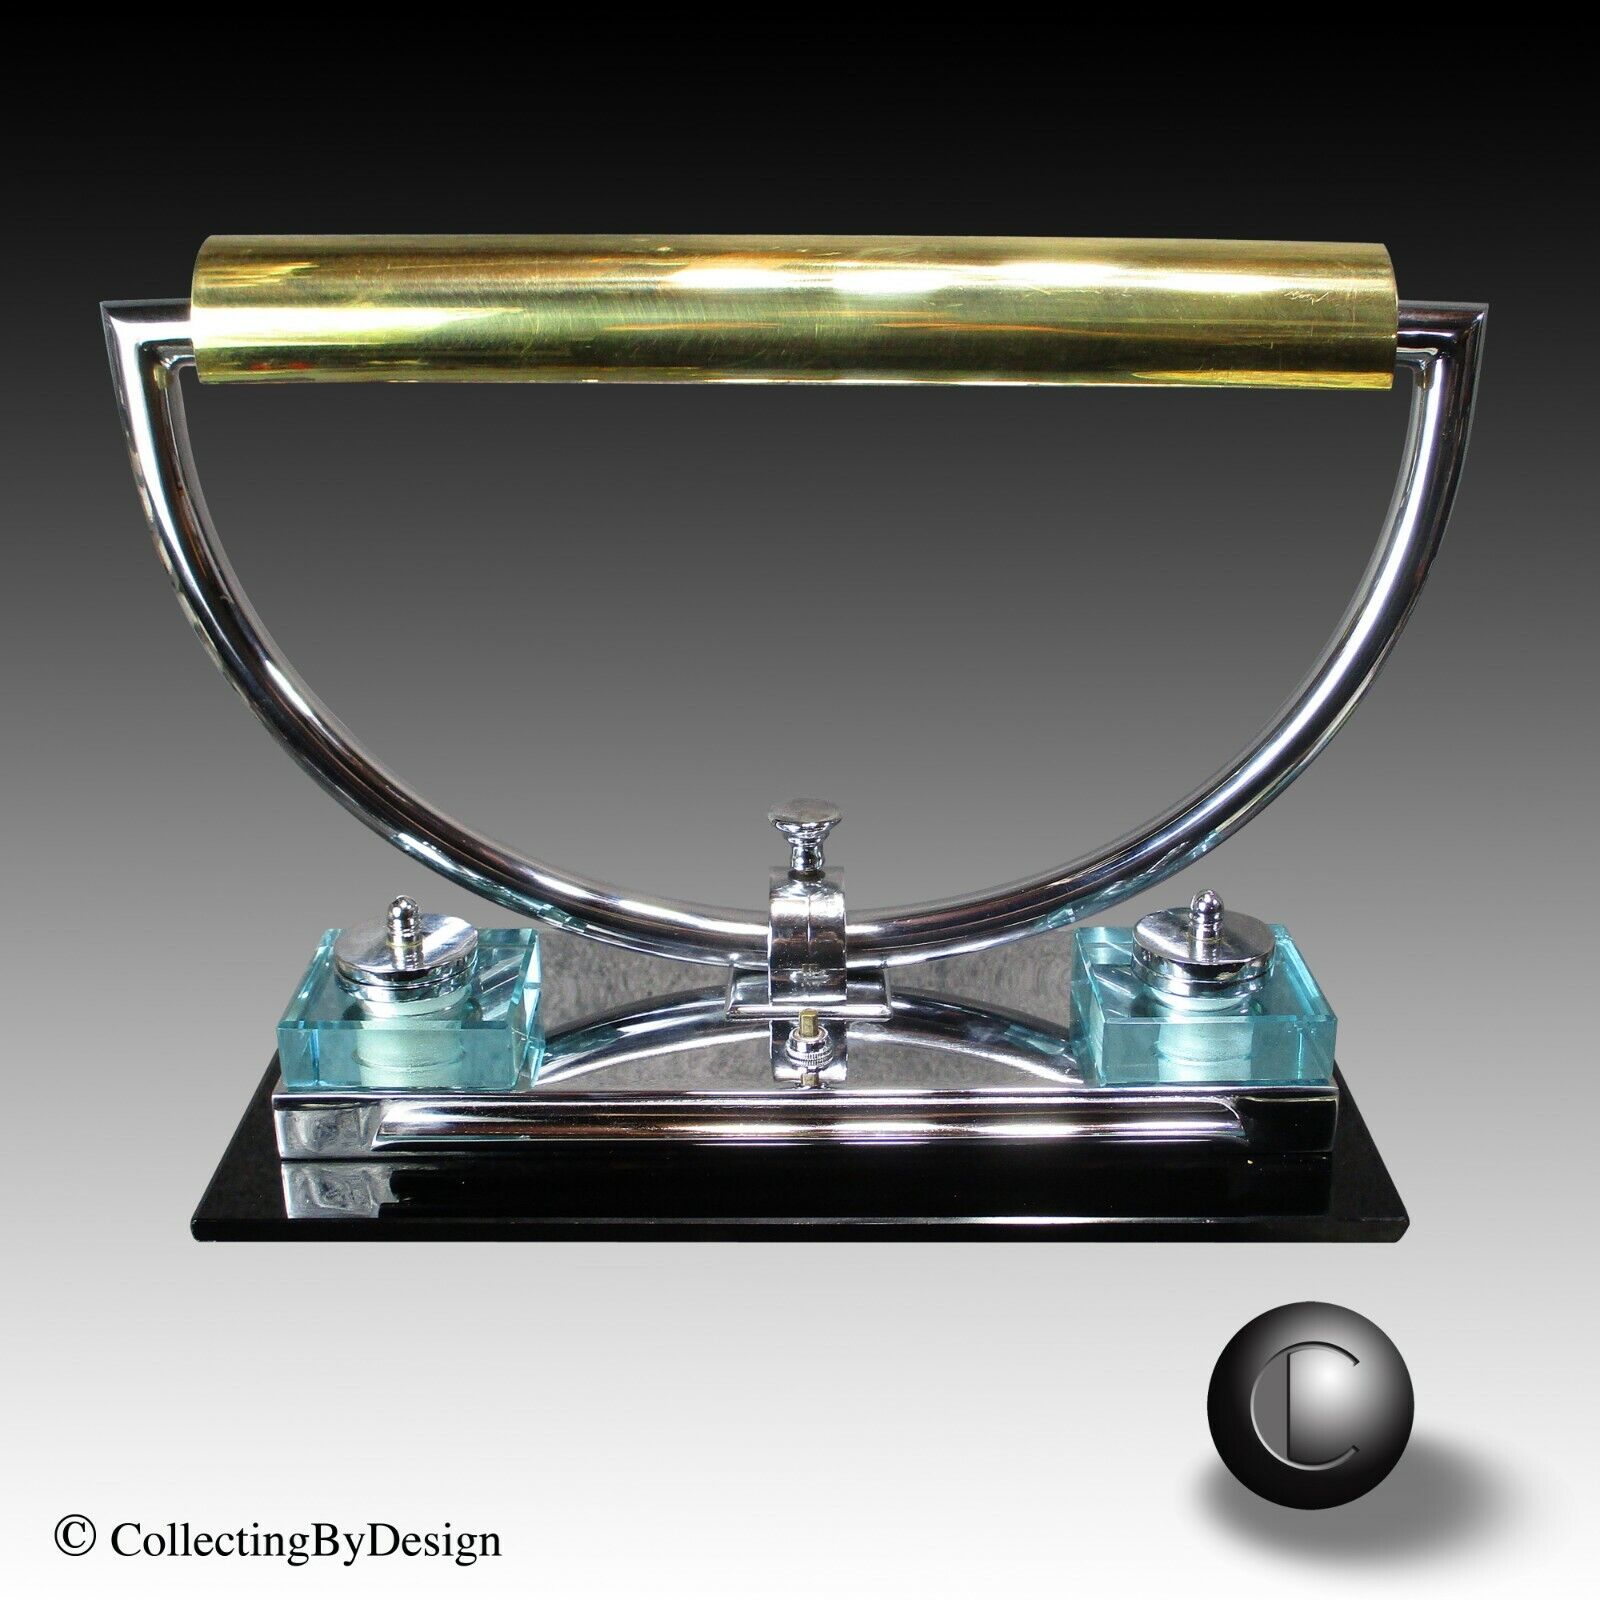 VTG Art Deco Lamp Desk Set of Chrome/Brass/Glass c.1925 France -Rohde Deskey Era